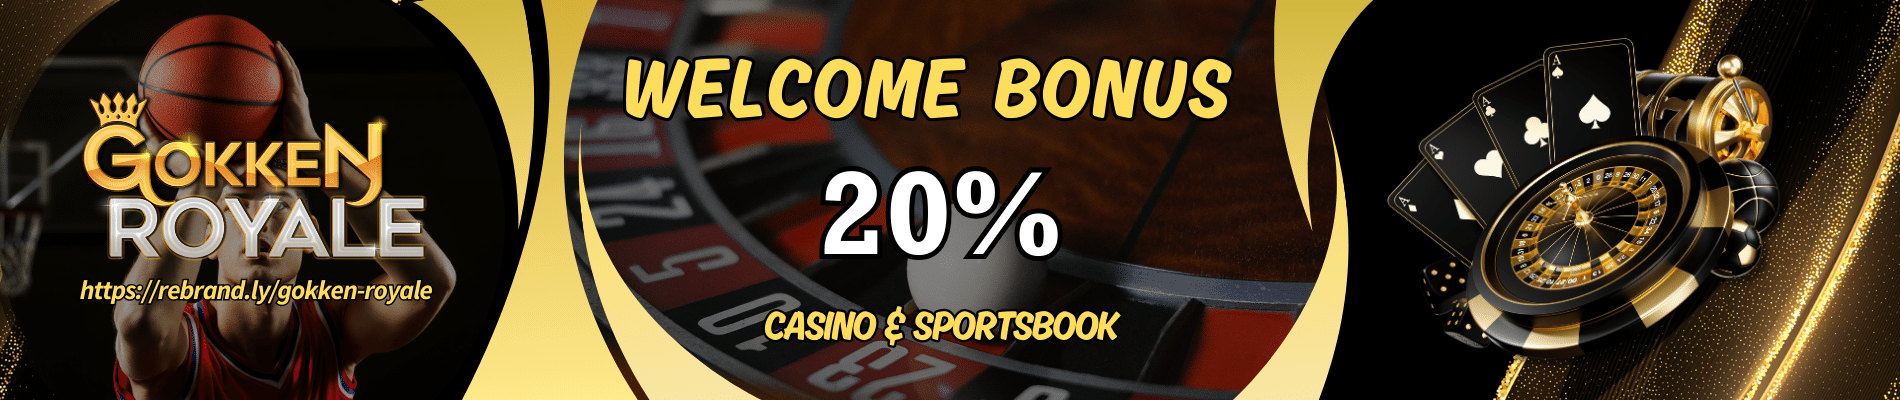 Welcome Bonus 20% | Casino & Sportsbook